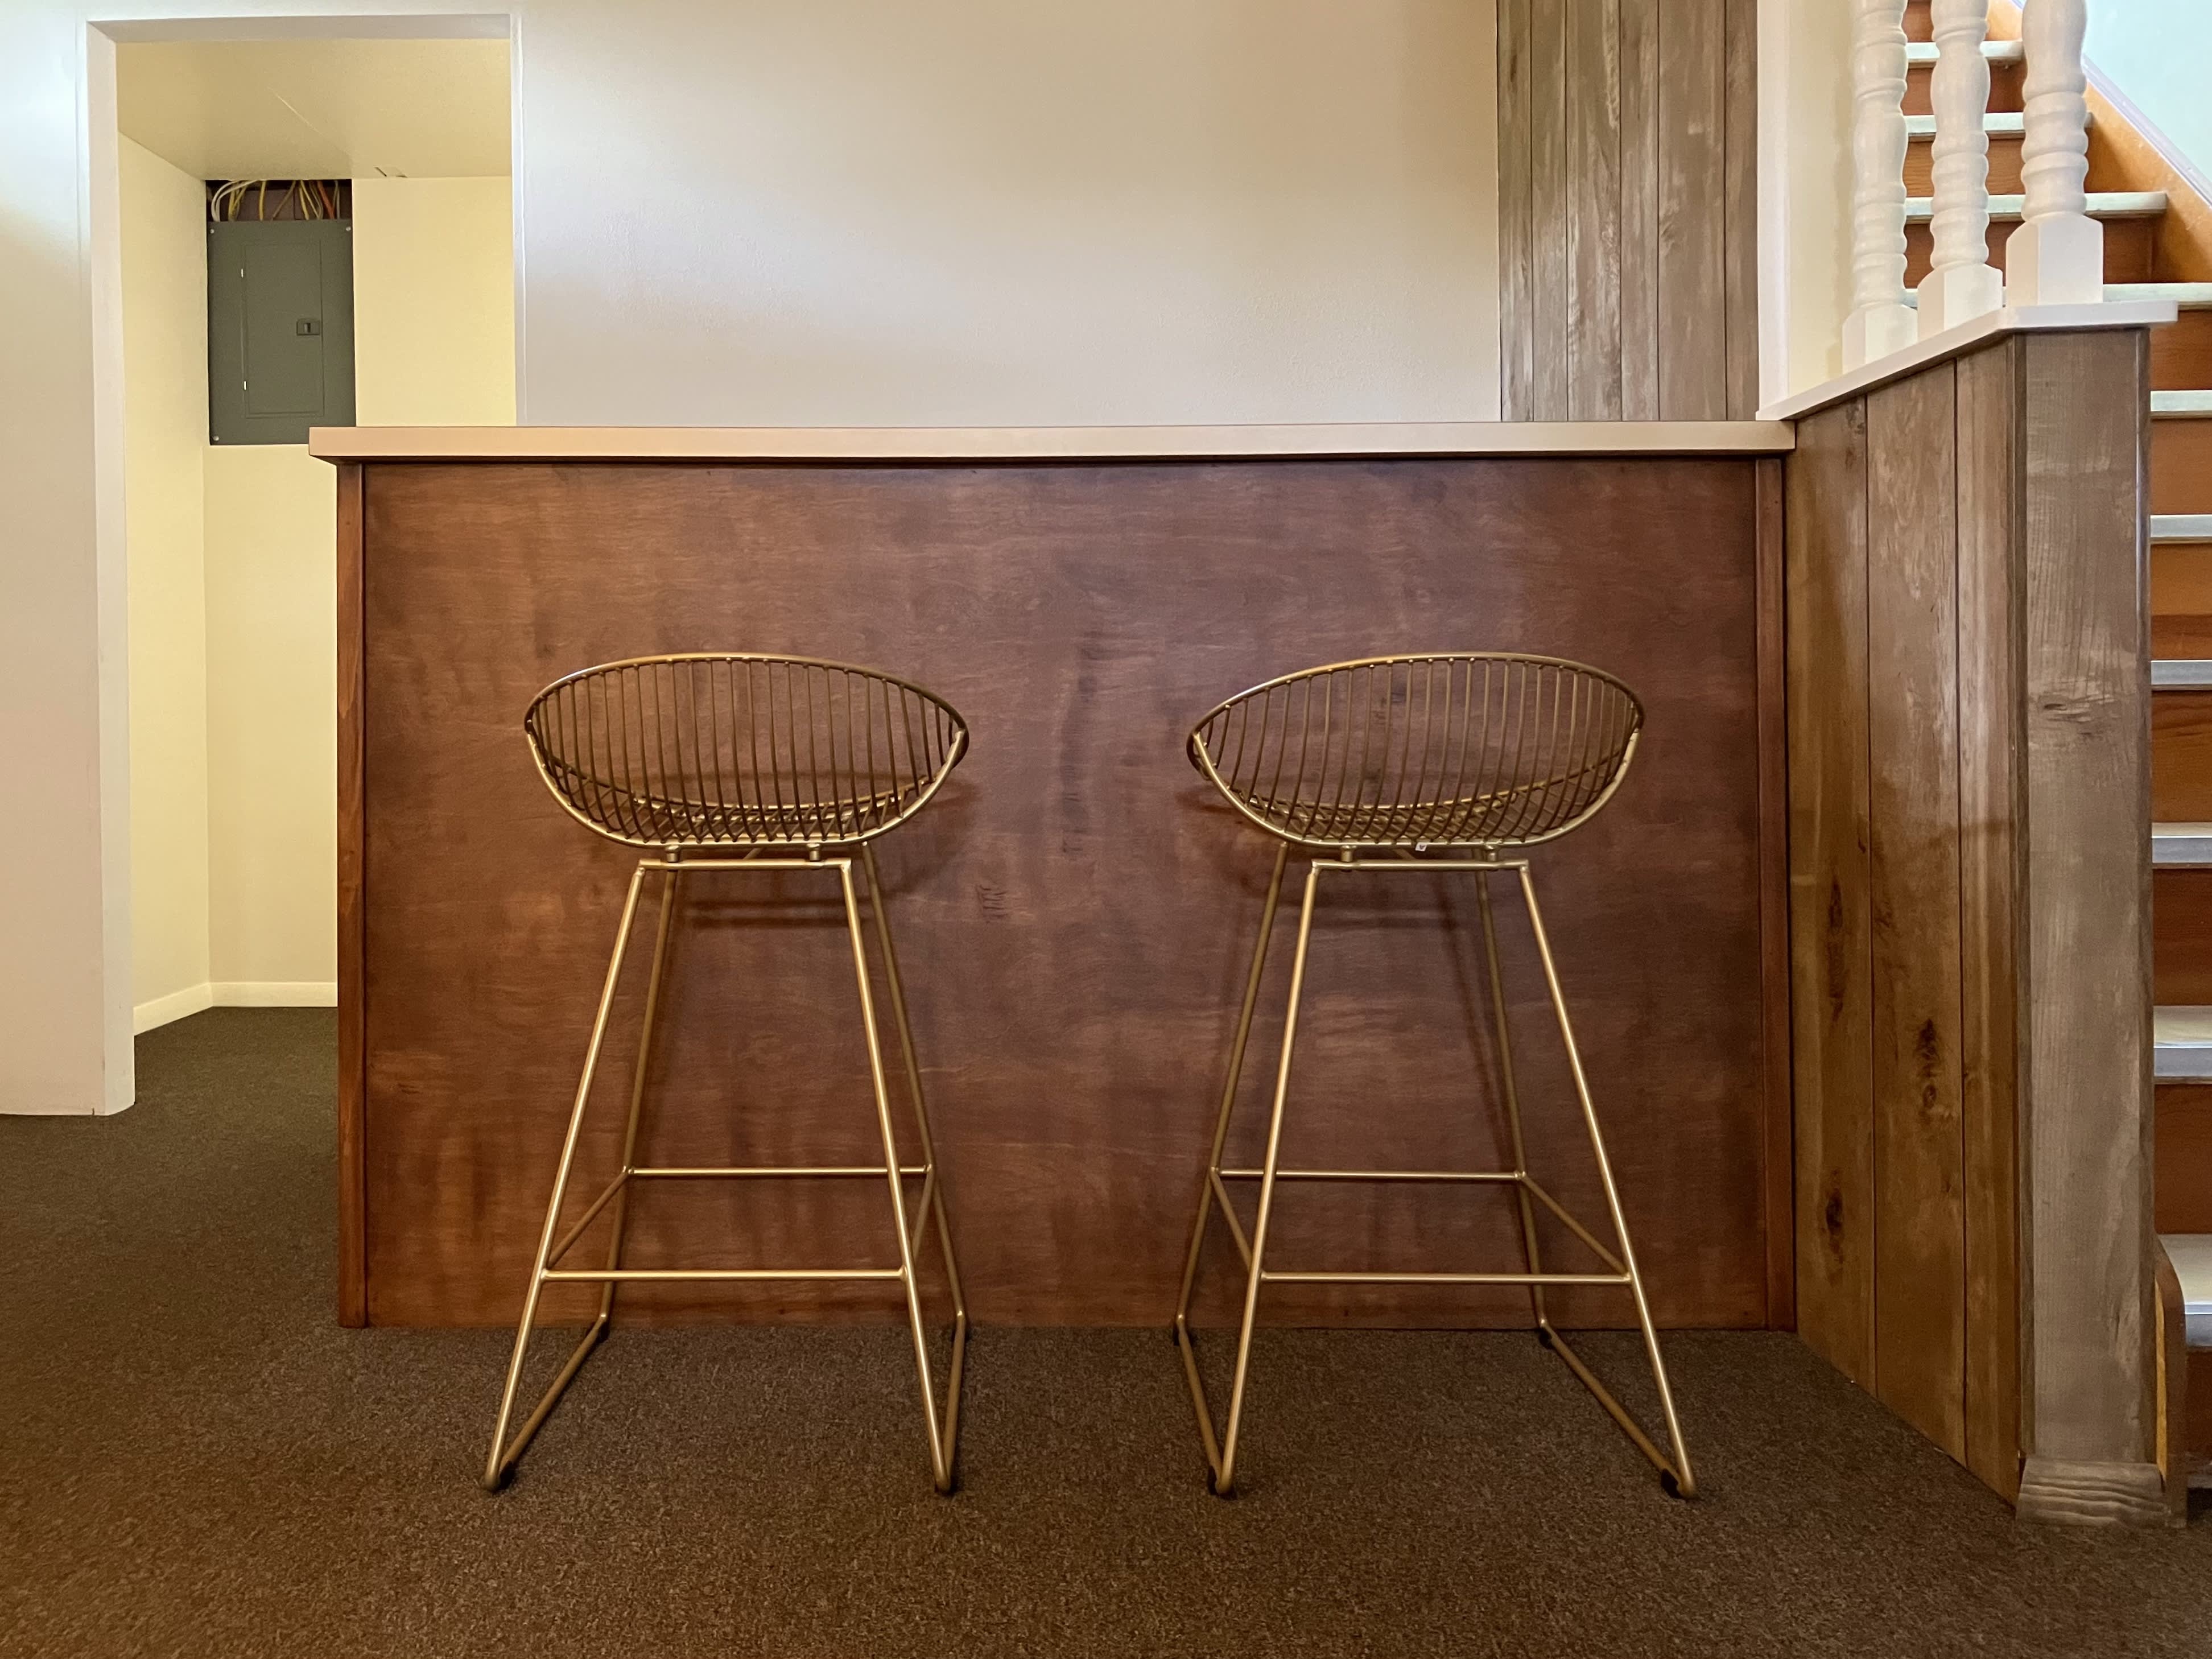 Beyond the Kitchen: 7 Surprising Bar Stool Interior Design Uses